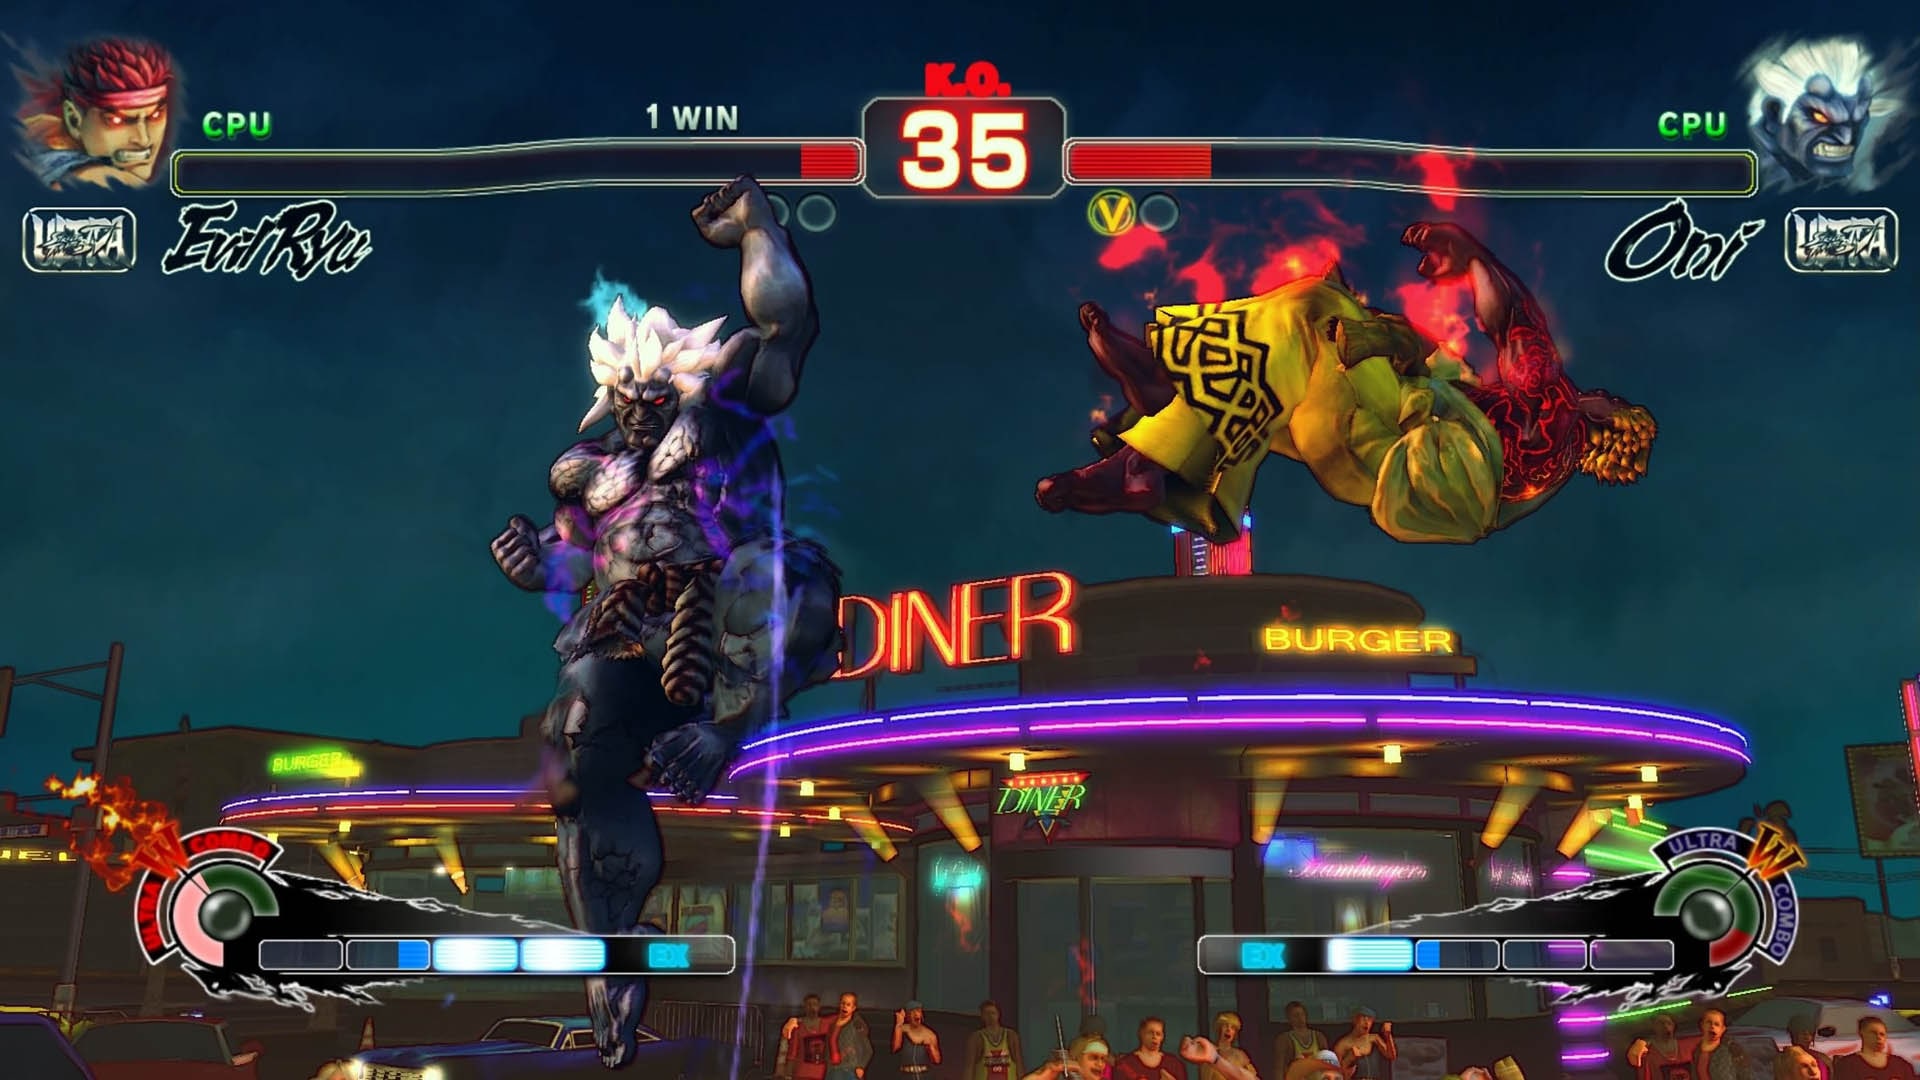 Ultra Street Fighter 4 Digital Download Price Comparison 